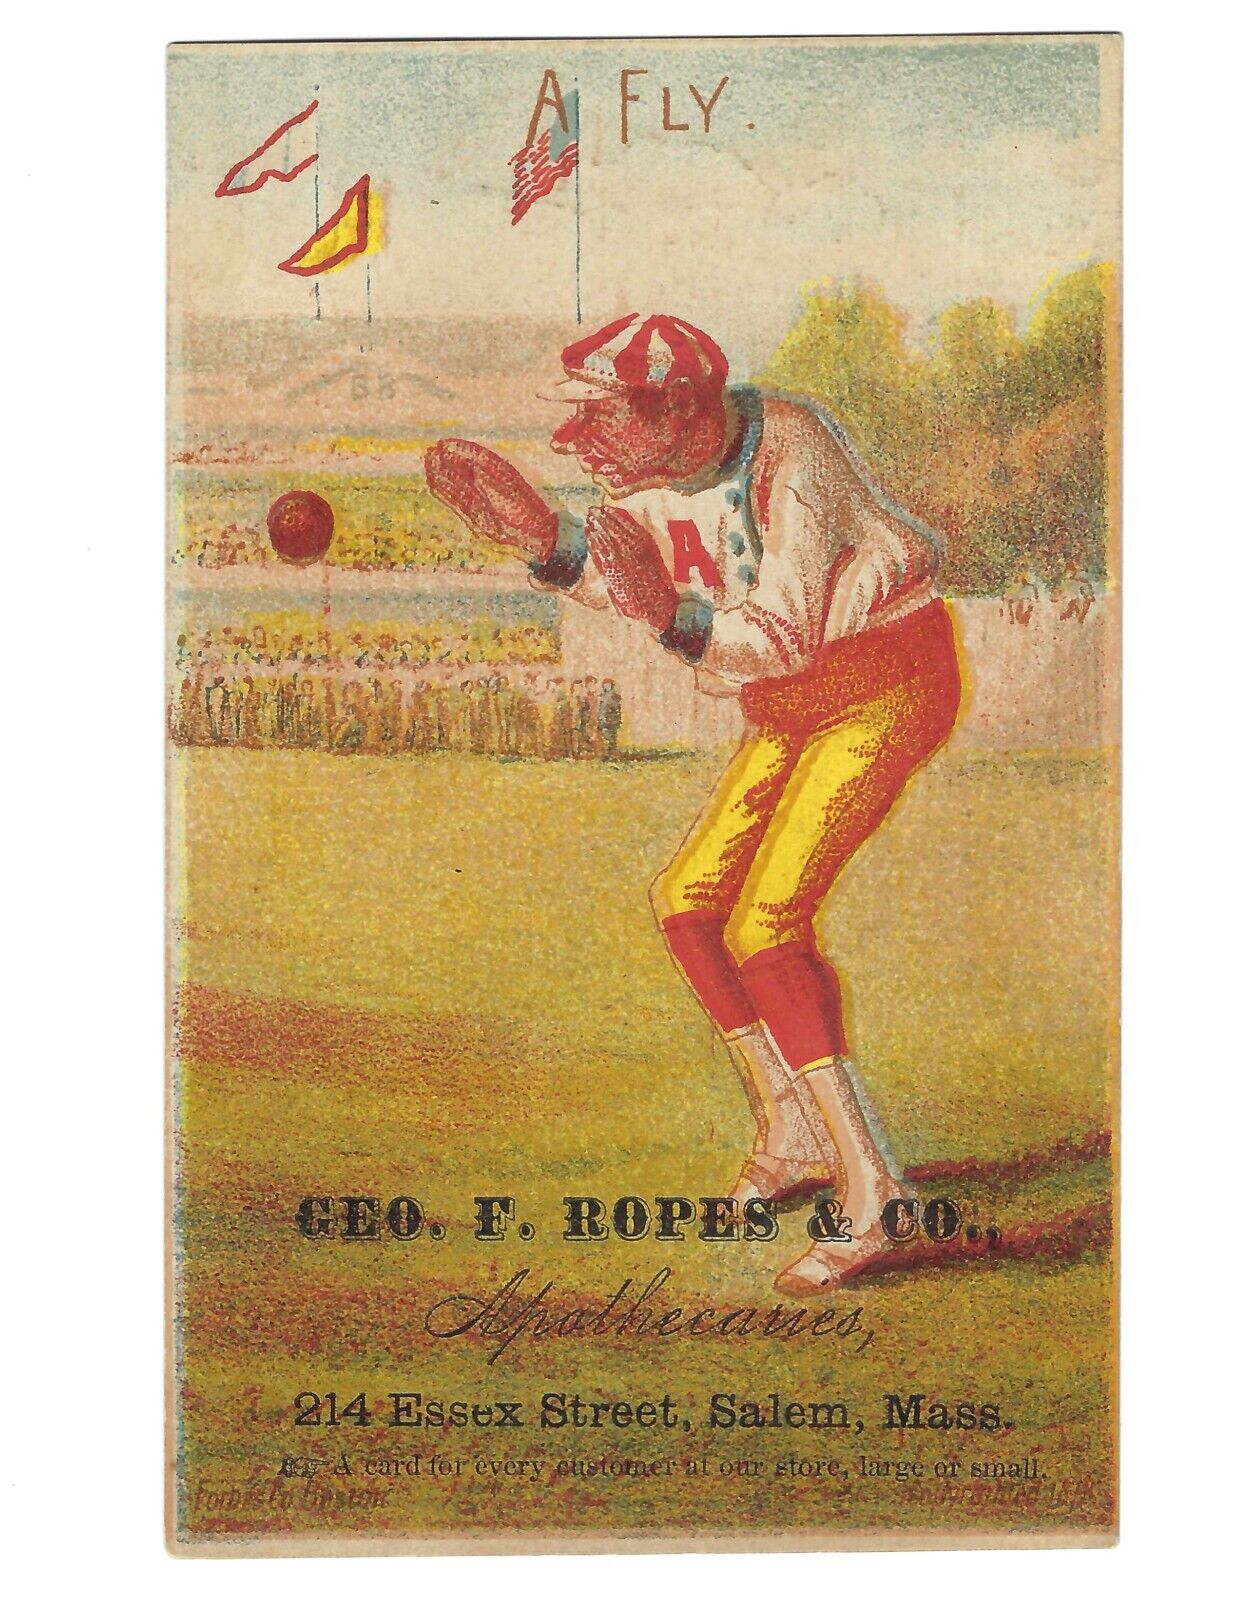 Baseball Trade Card A Fly  Trade card Geo. F. Ropes & Co., apothecaries, 1880's?